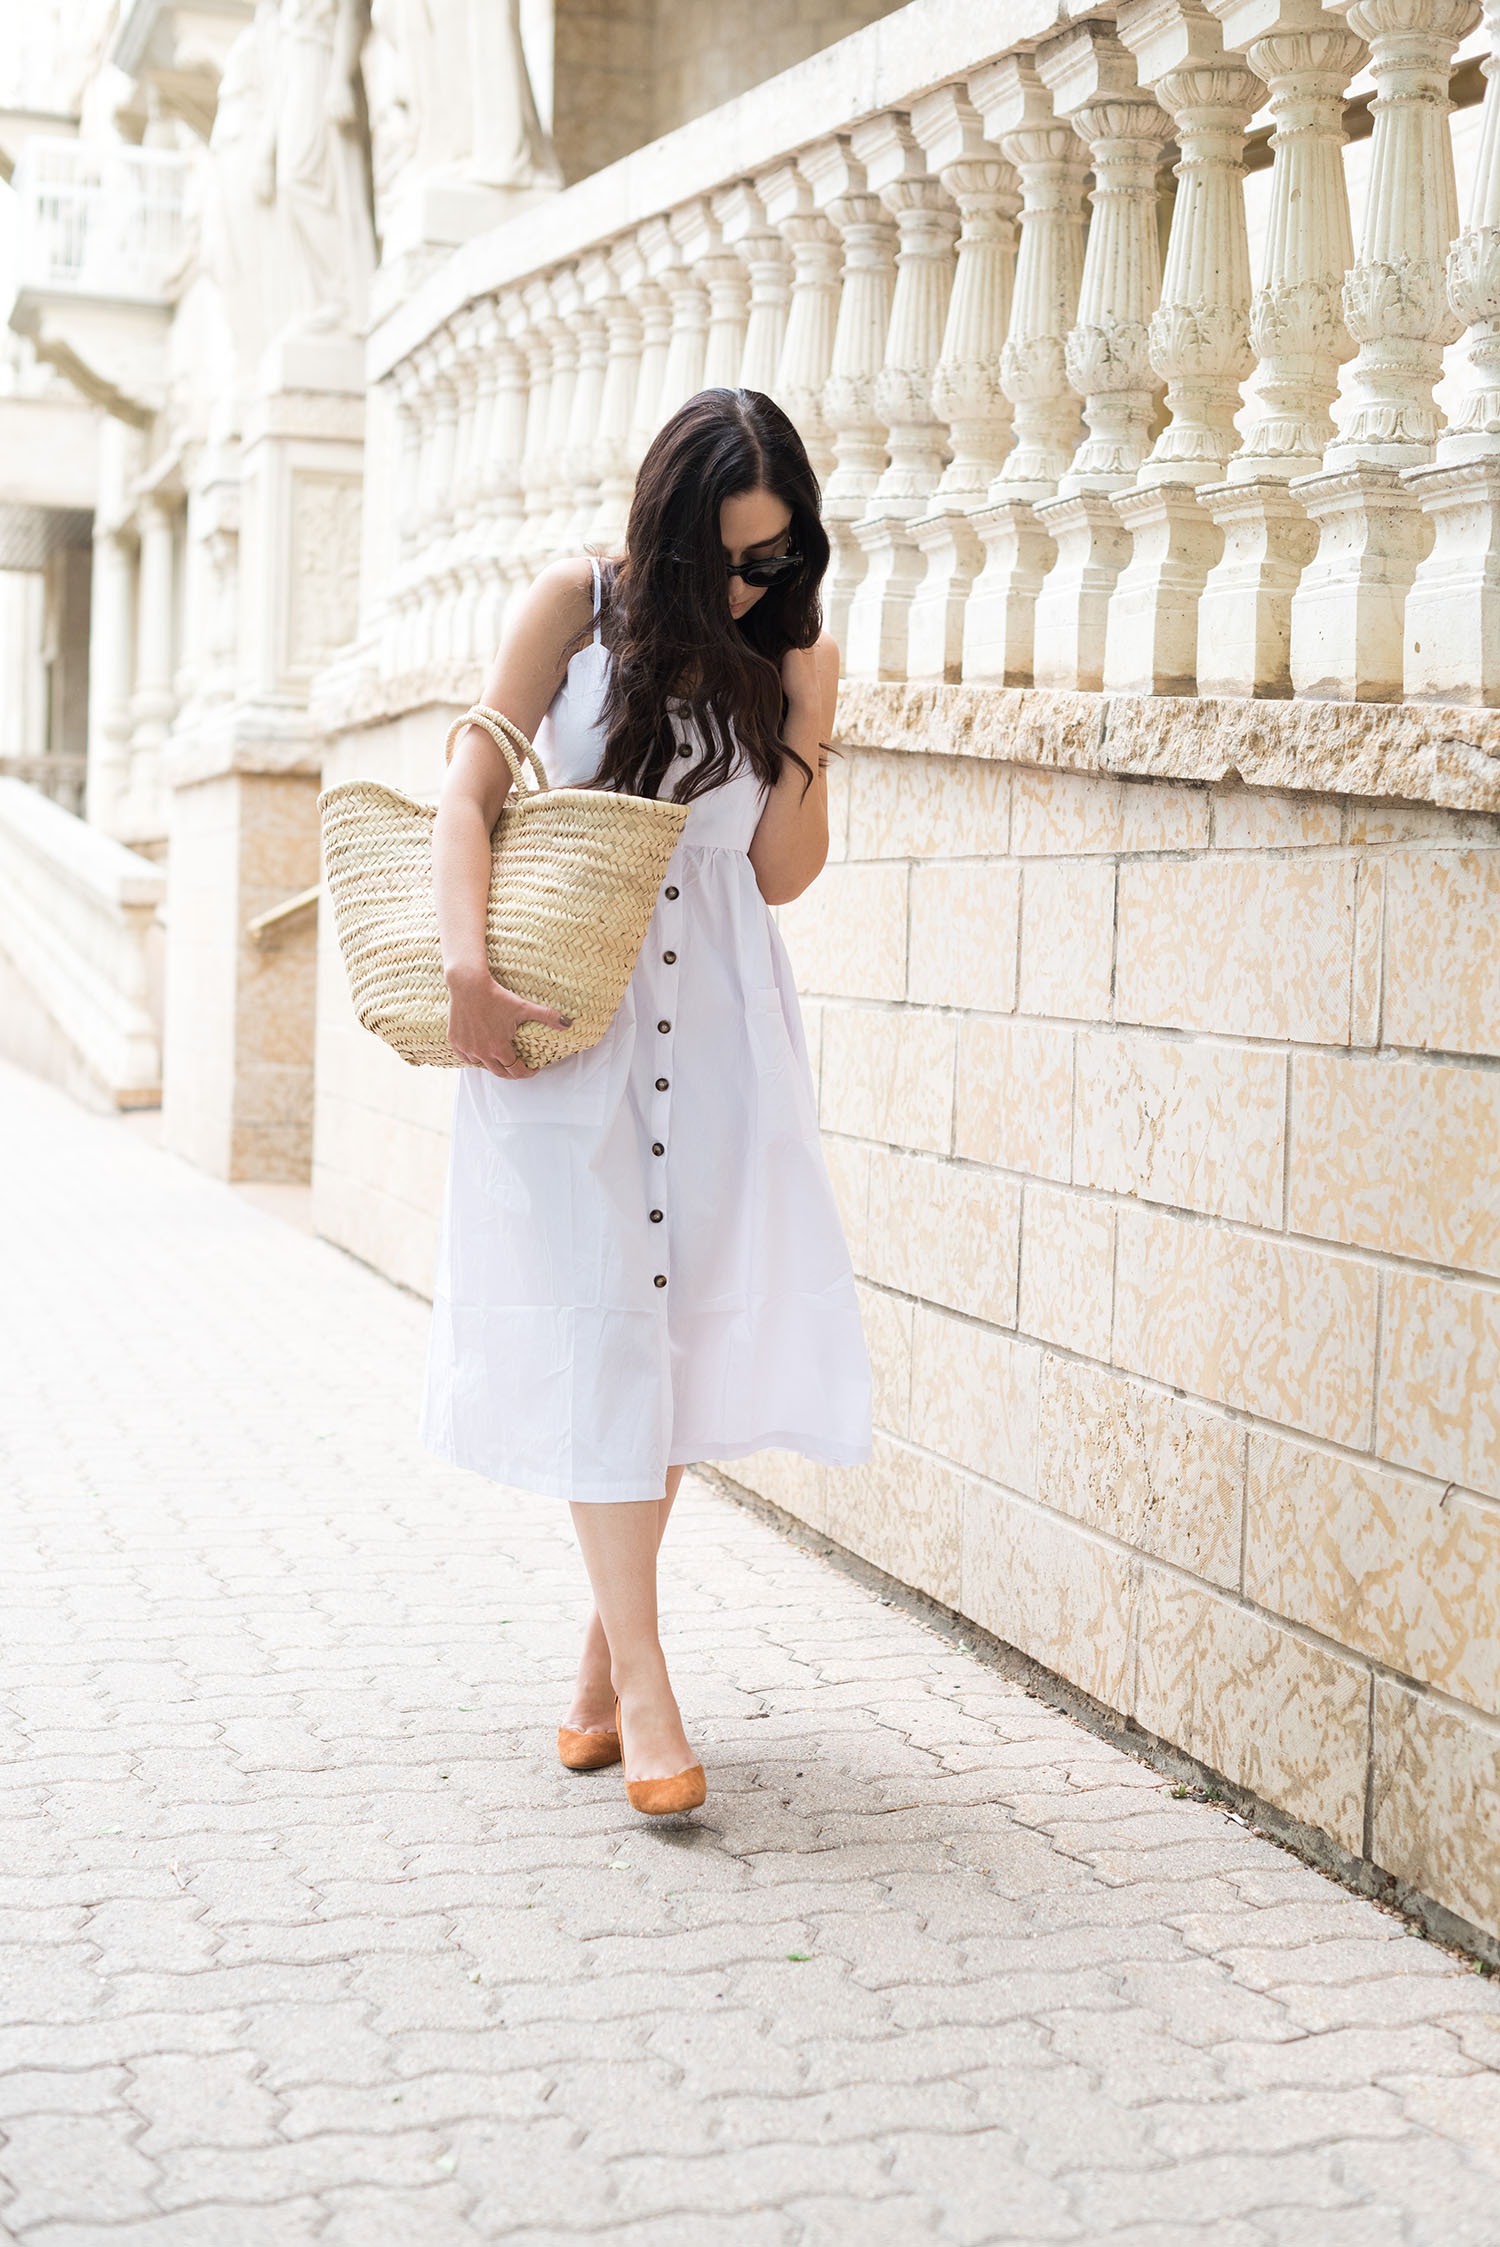 Top Winnipeg fashion blogger Cee Fardoe of Coco & Vera wears a white dress from Veni Dress and carries a Sezane straw tote bag